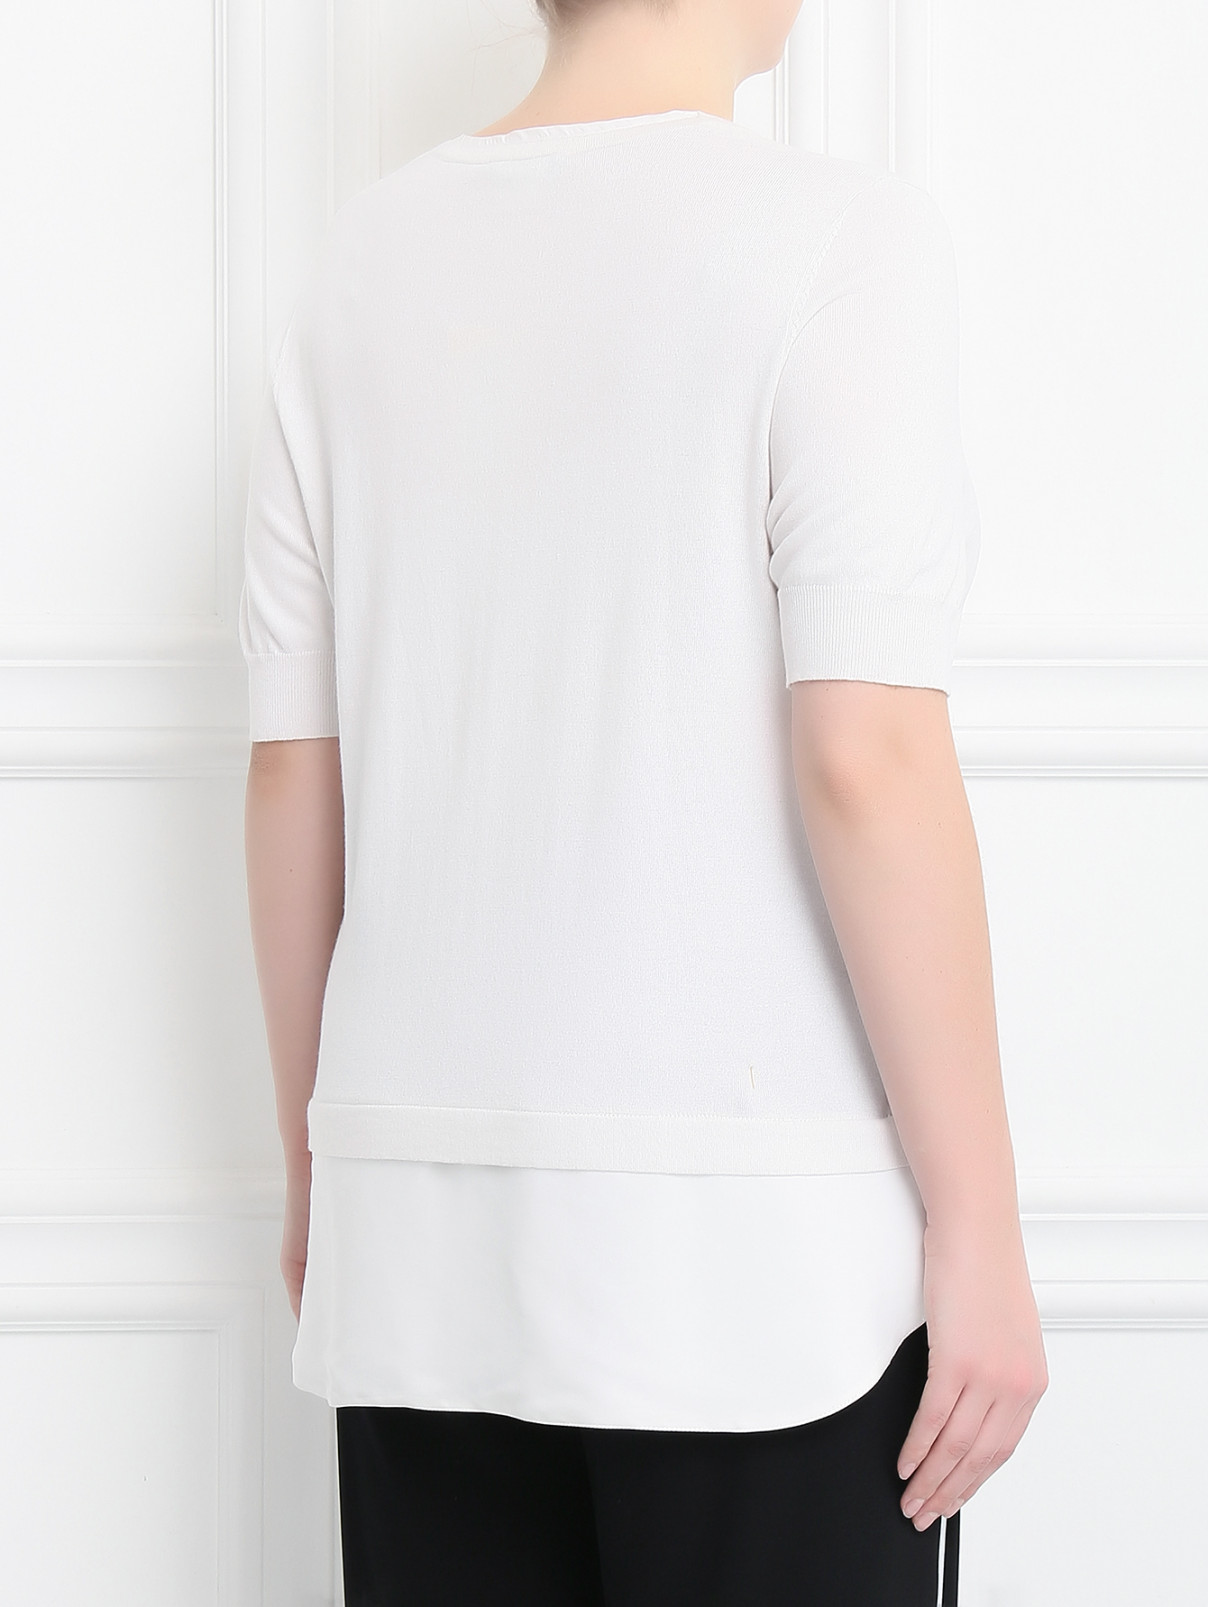 Джемпер из шелка и хлопка Marina Rinaldi  –  Модель Верх-Низ1  – Цвет:  Белый